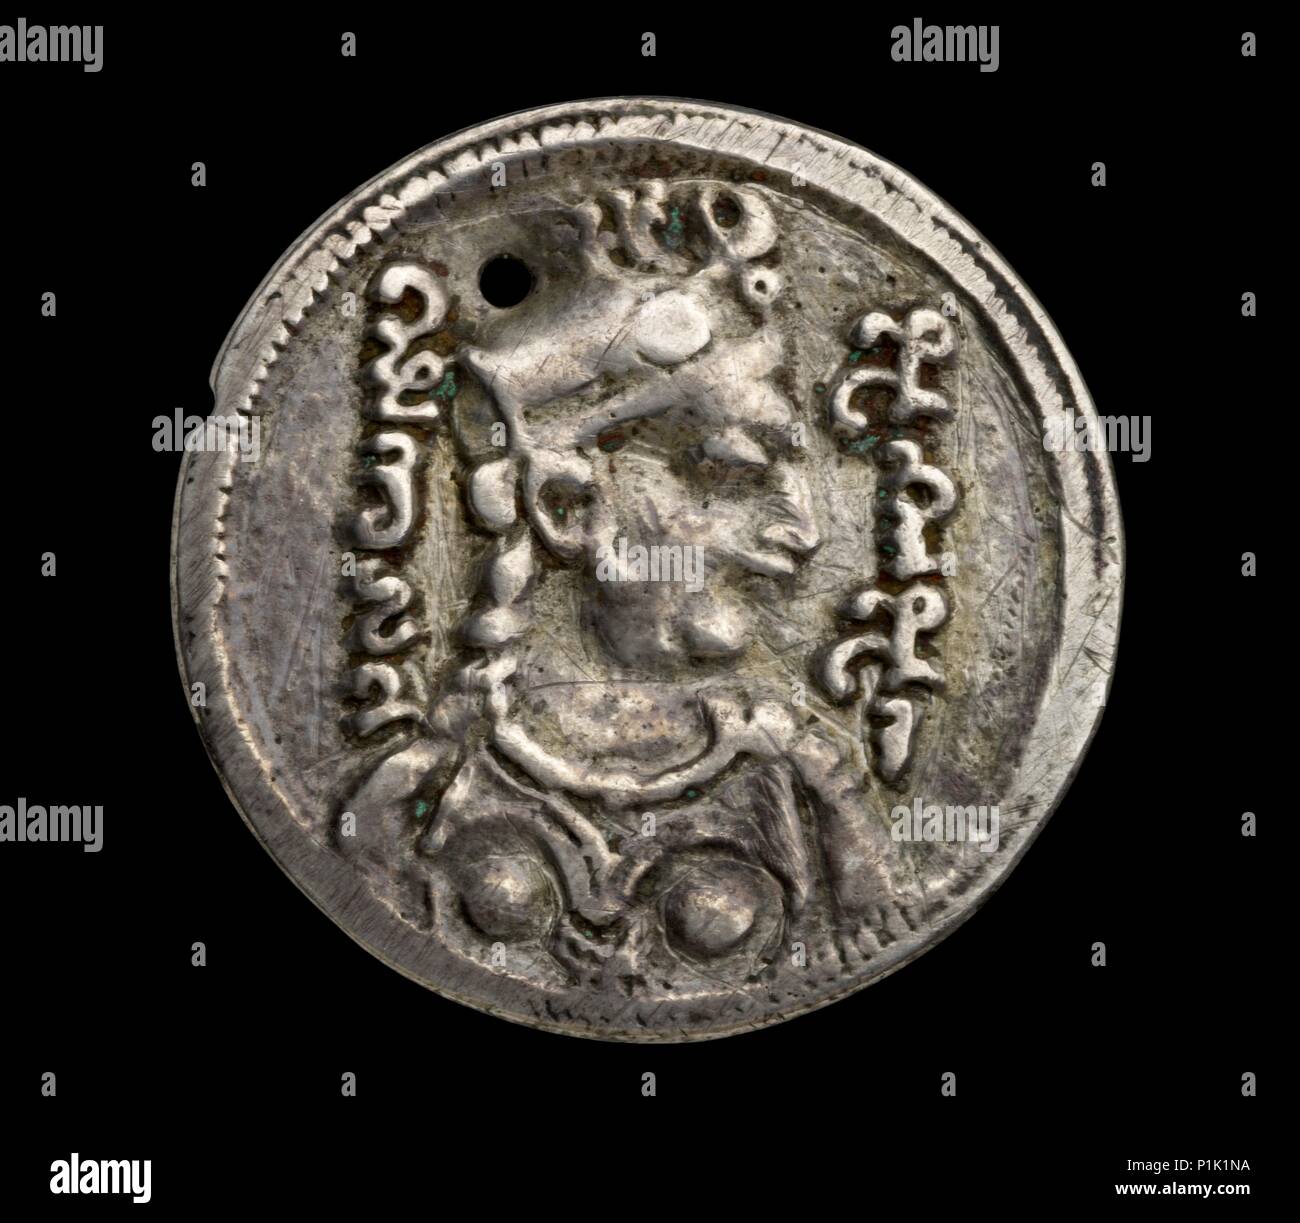 Islamic Coin, c10th century. Artist: Unknown. Stock Photo